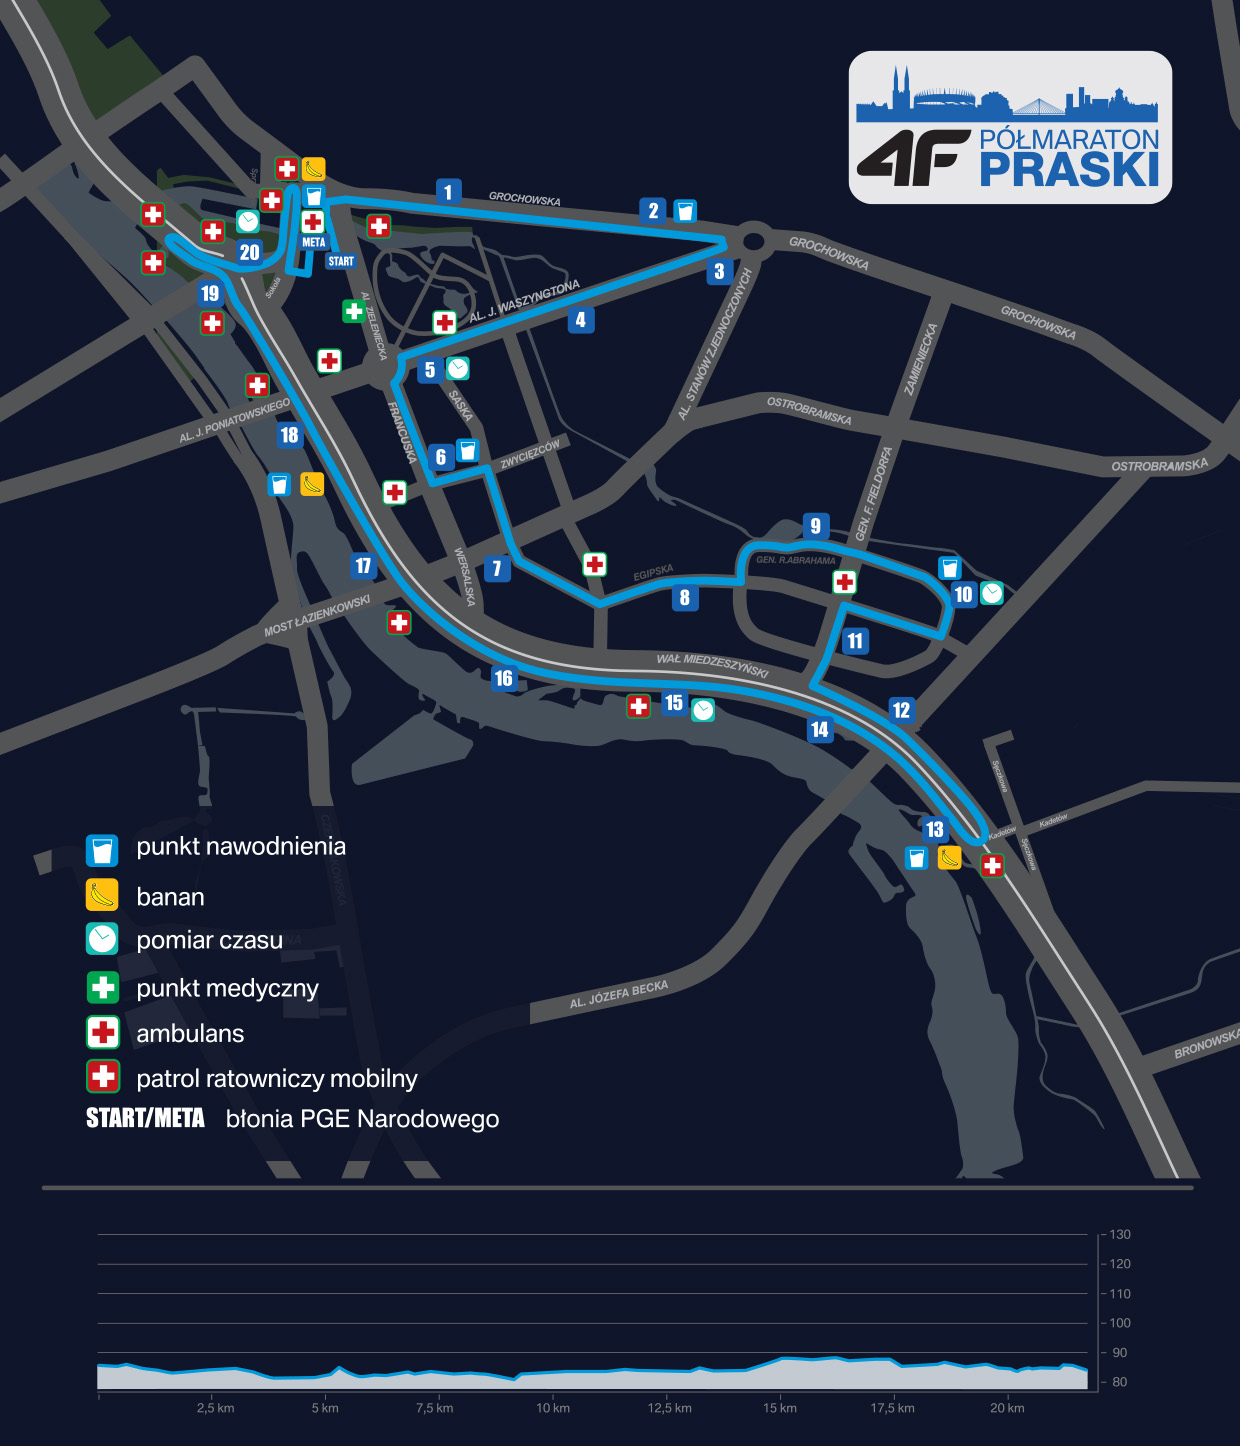 Półmaraton Praski 2018 trasa | Aktywer.pl